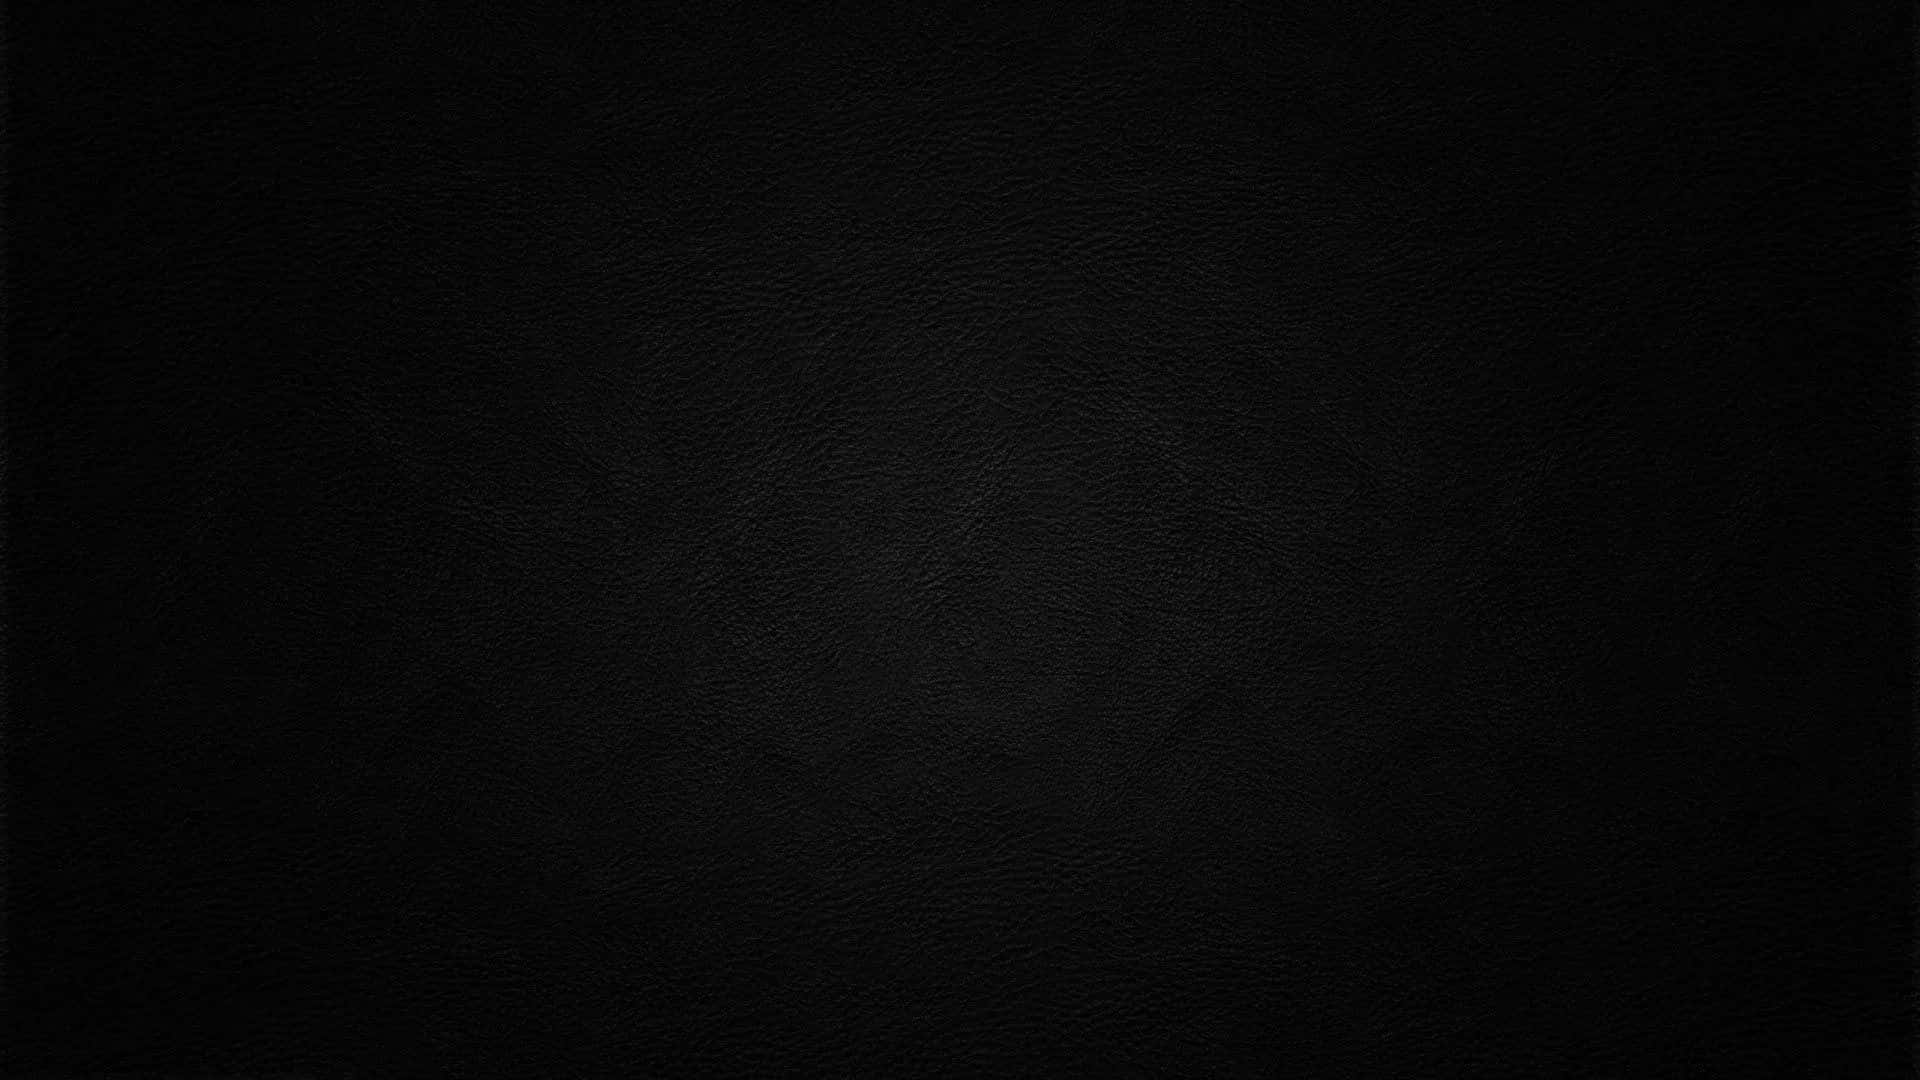 Deep Darkness - Refined Black Screen Background